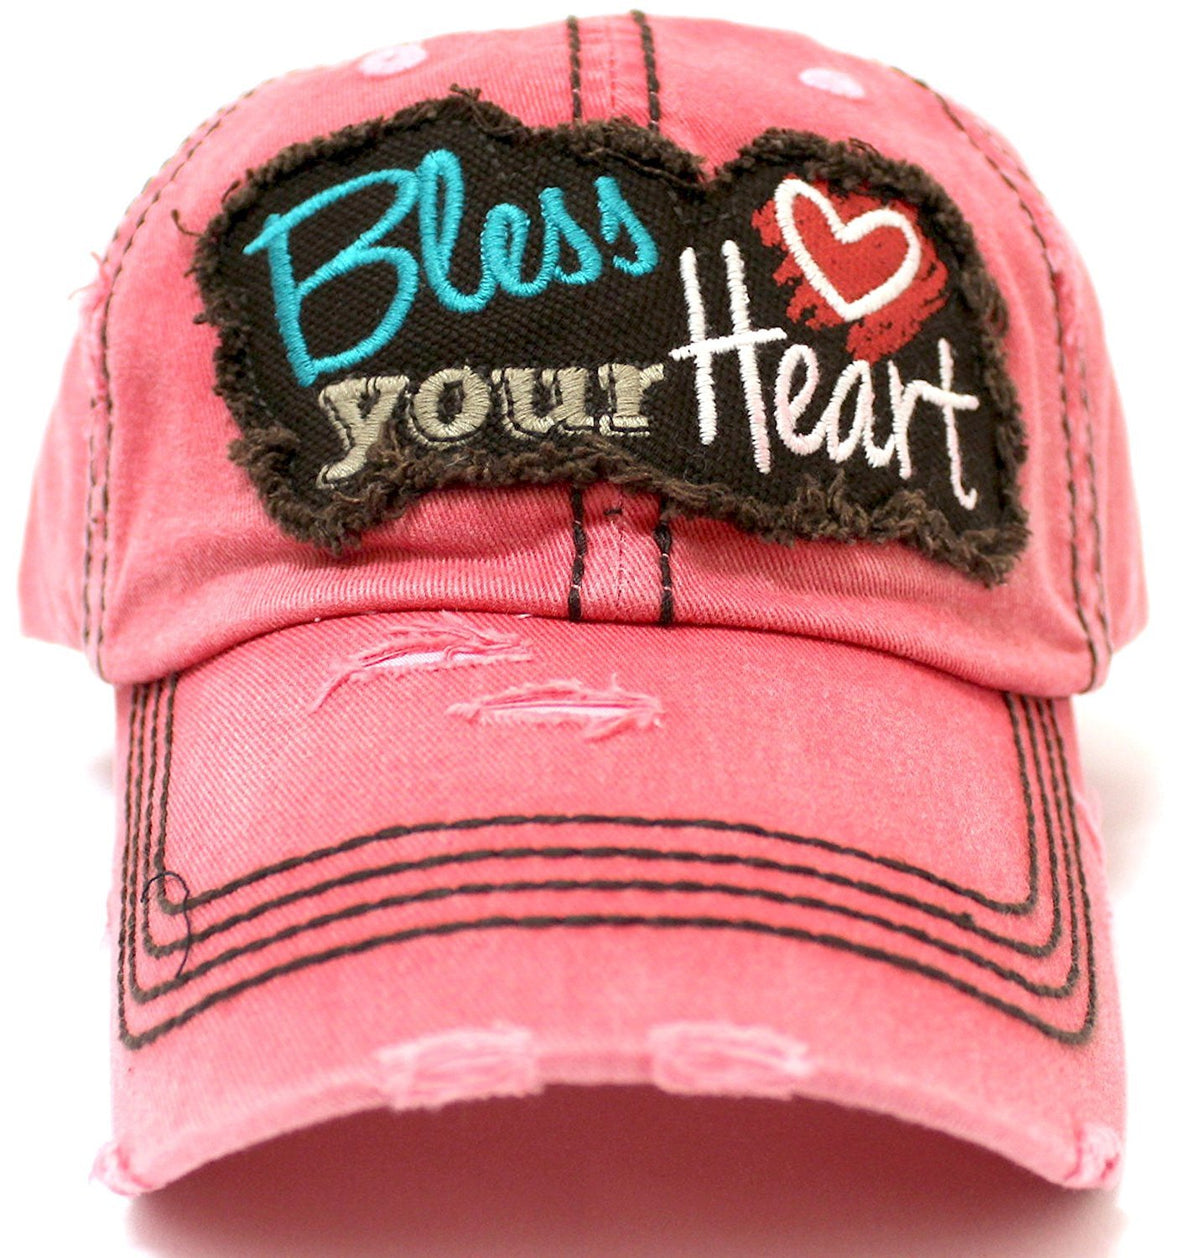 Rose "BLESS YOUR HEART" Women's Cap w/ <3 Detail - Caps 'N Vintage 